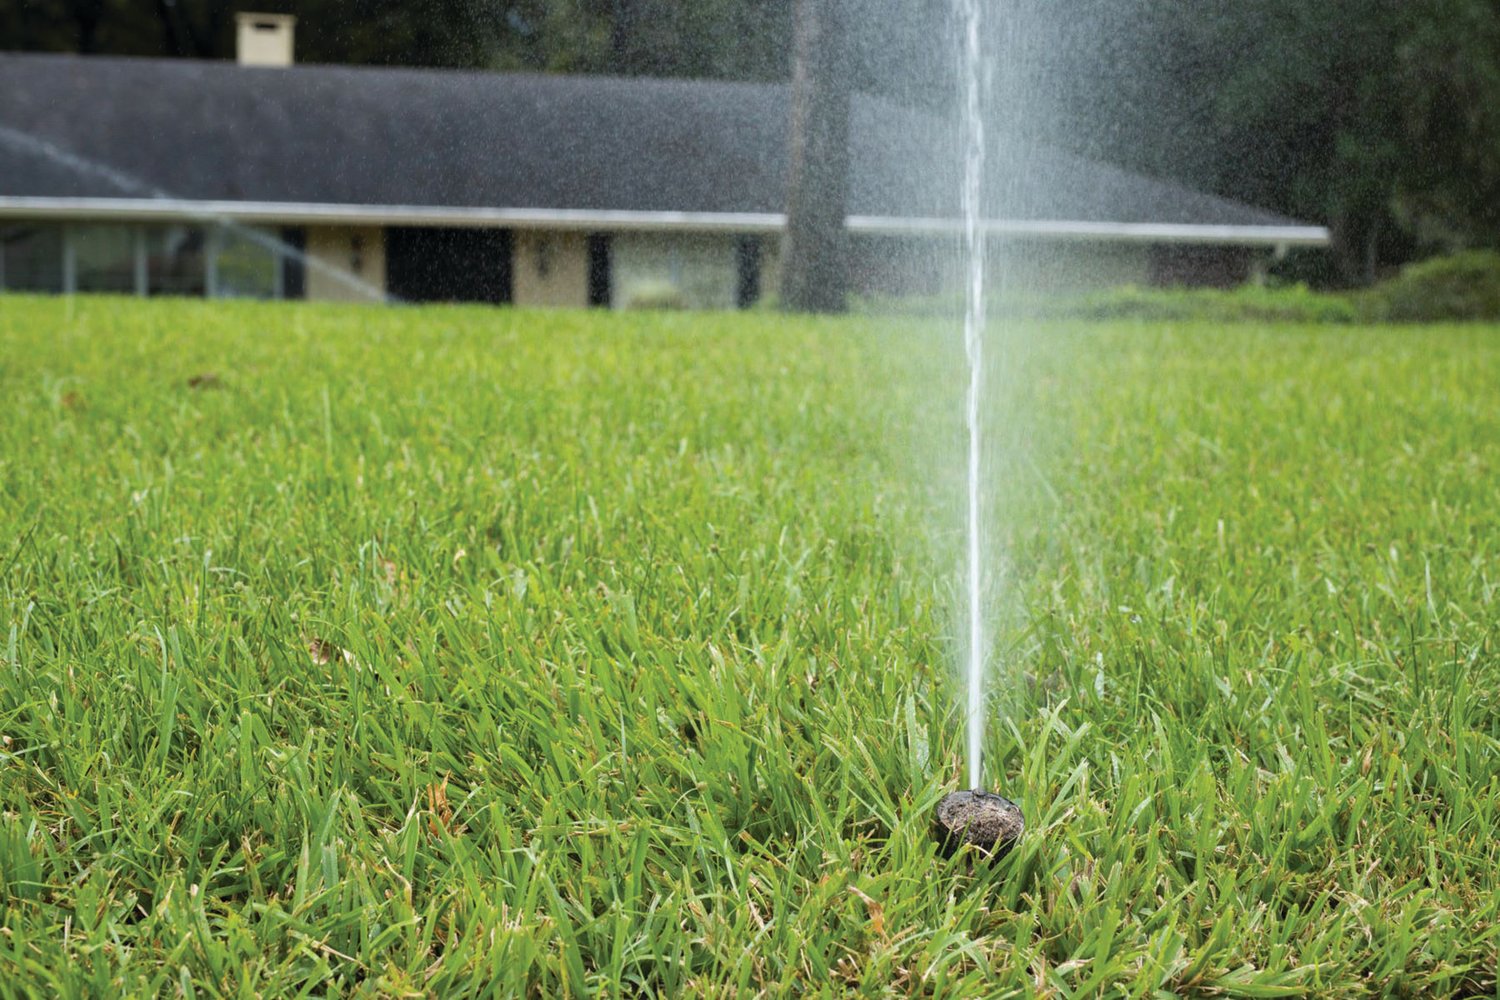 A sprinkler watering a residential lawn.